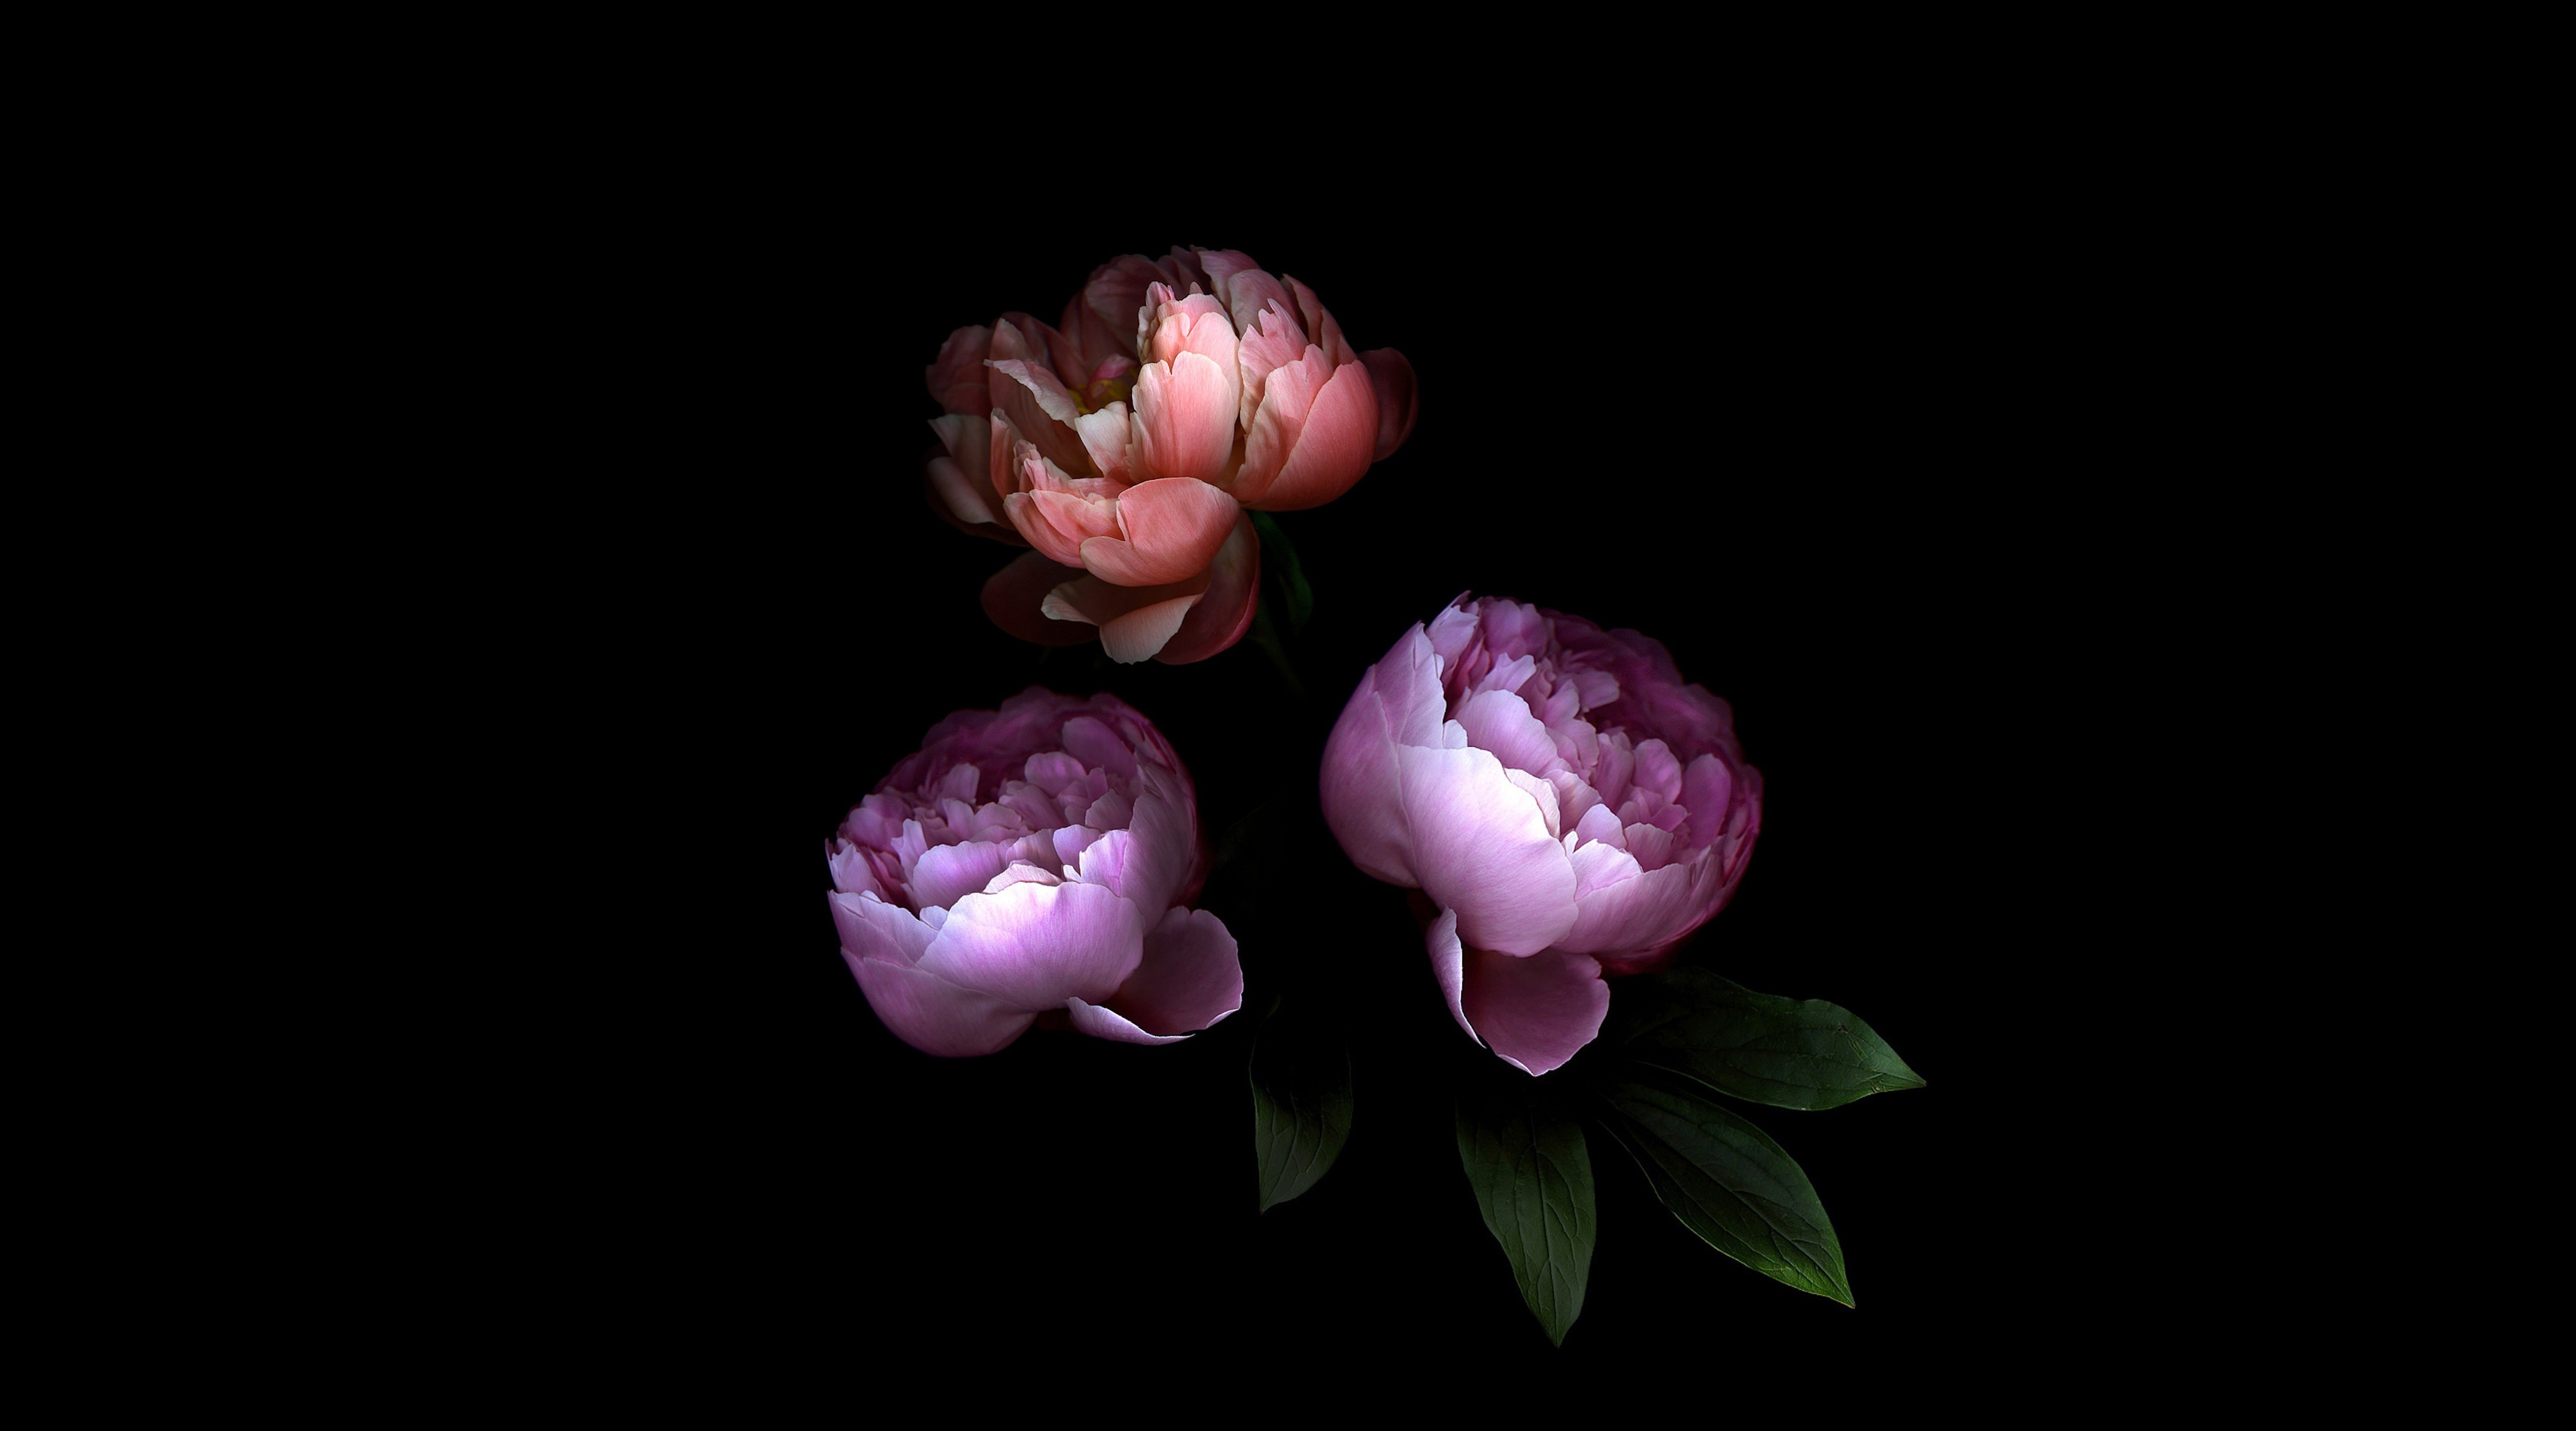 HD wallpaper, Rose Flowers, Roses, Black Background, 5K, Colorful